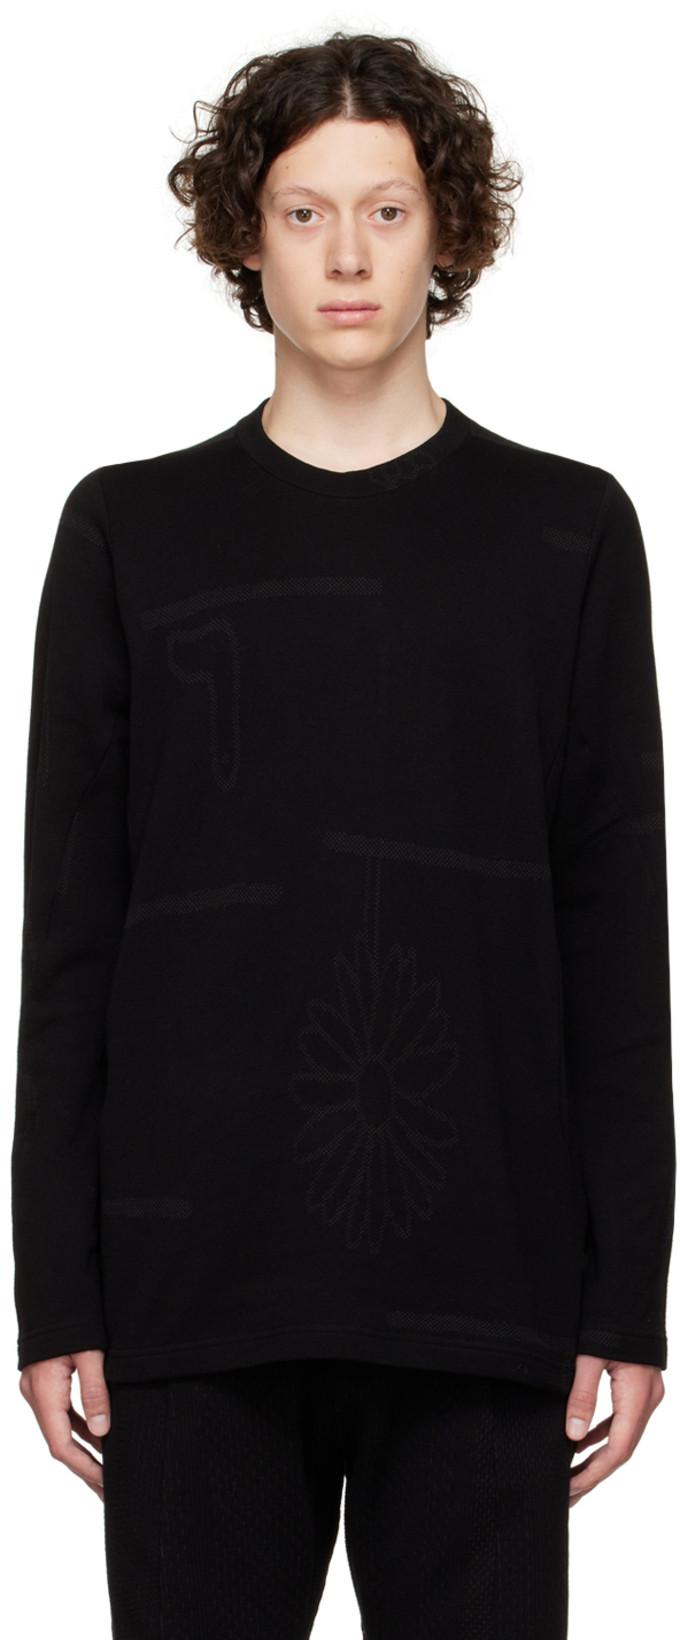 Black Organic Cotton Long Sleeve T-Shirt by BYBORRE